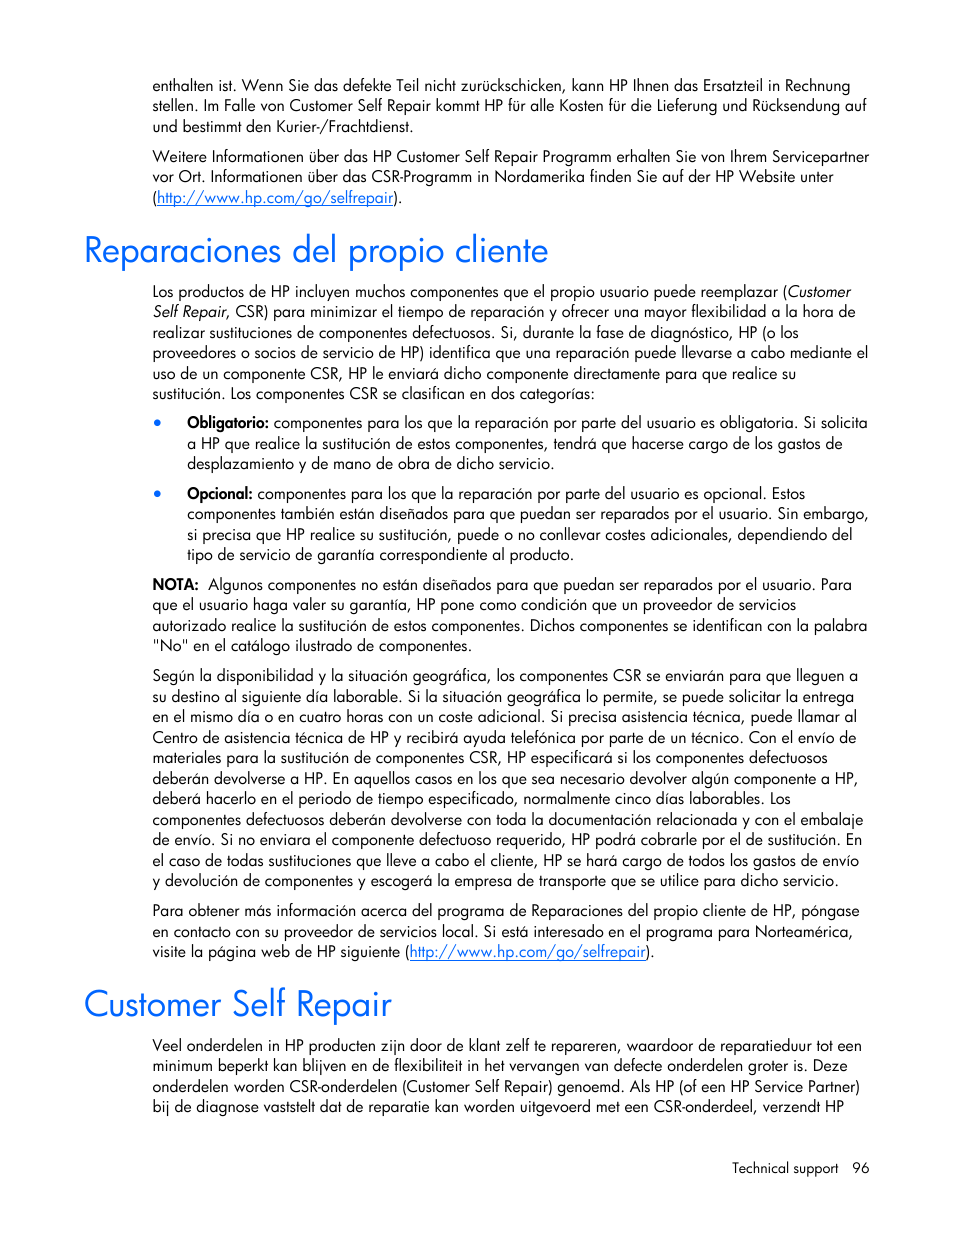 Reparaciones del propio cliente, Customer self repair | HP ProLiant DL320  G5p Server User Manual | Page 96 / 106 | Original mode